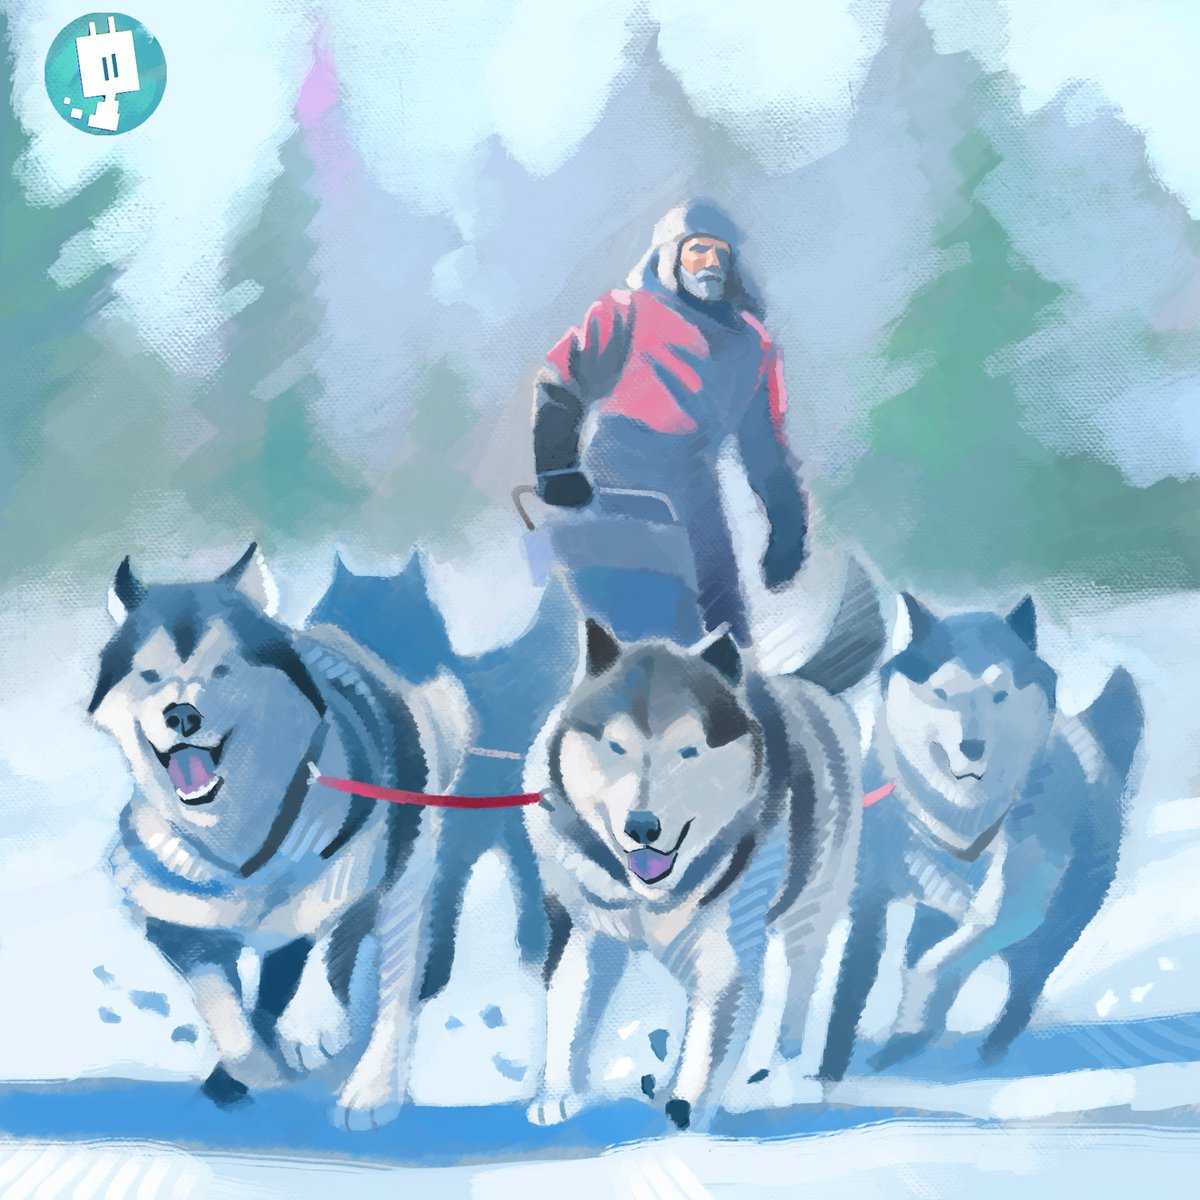 ❄ Siberian Husky Sled Dogs ❄
Facebook
facebook.com/pixi.gags
Instagram
instagram.com/pixi_gags/
YouTube
youtube.com/c/PixiGags
✧
#husky #siberianhusky #sleddogs #dogs 
#art #winter #atmosphere #sledge #animation #pixigags #pixi_gags #design #canine #dogart